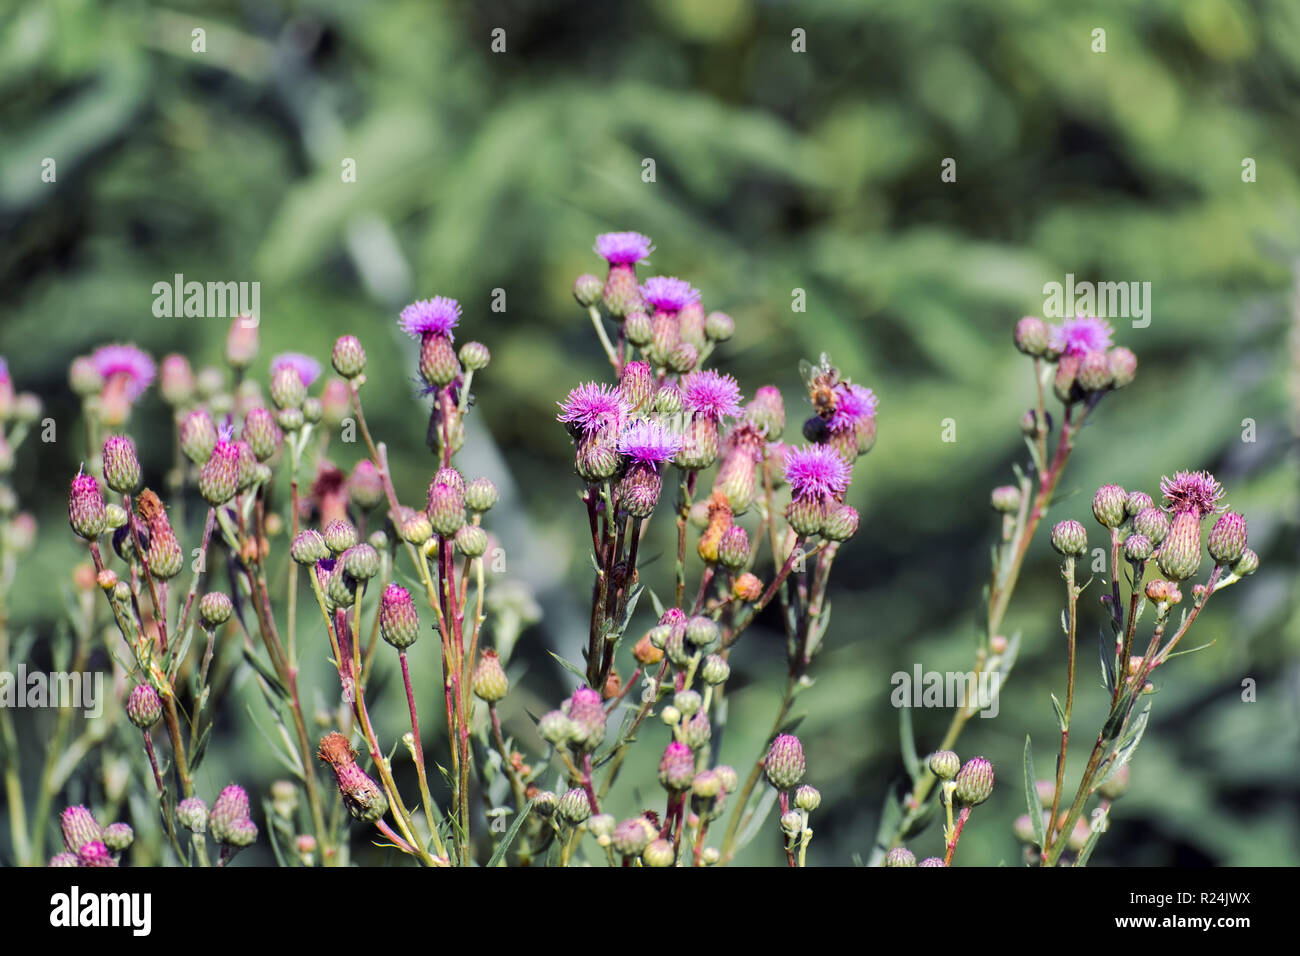 Purple flowers of creeping thistle (Cirsium arvense) Stock Photo